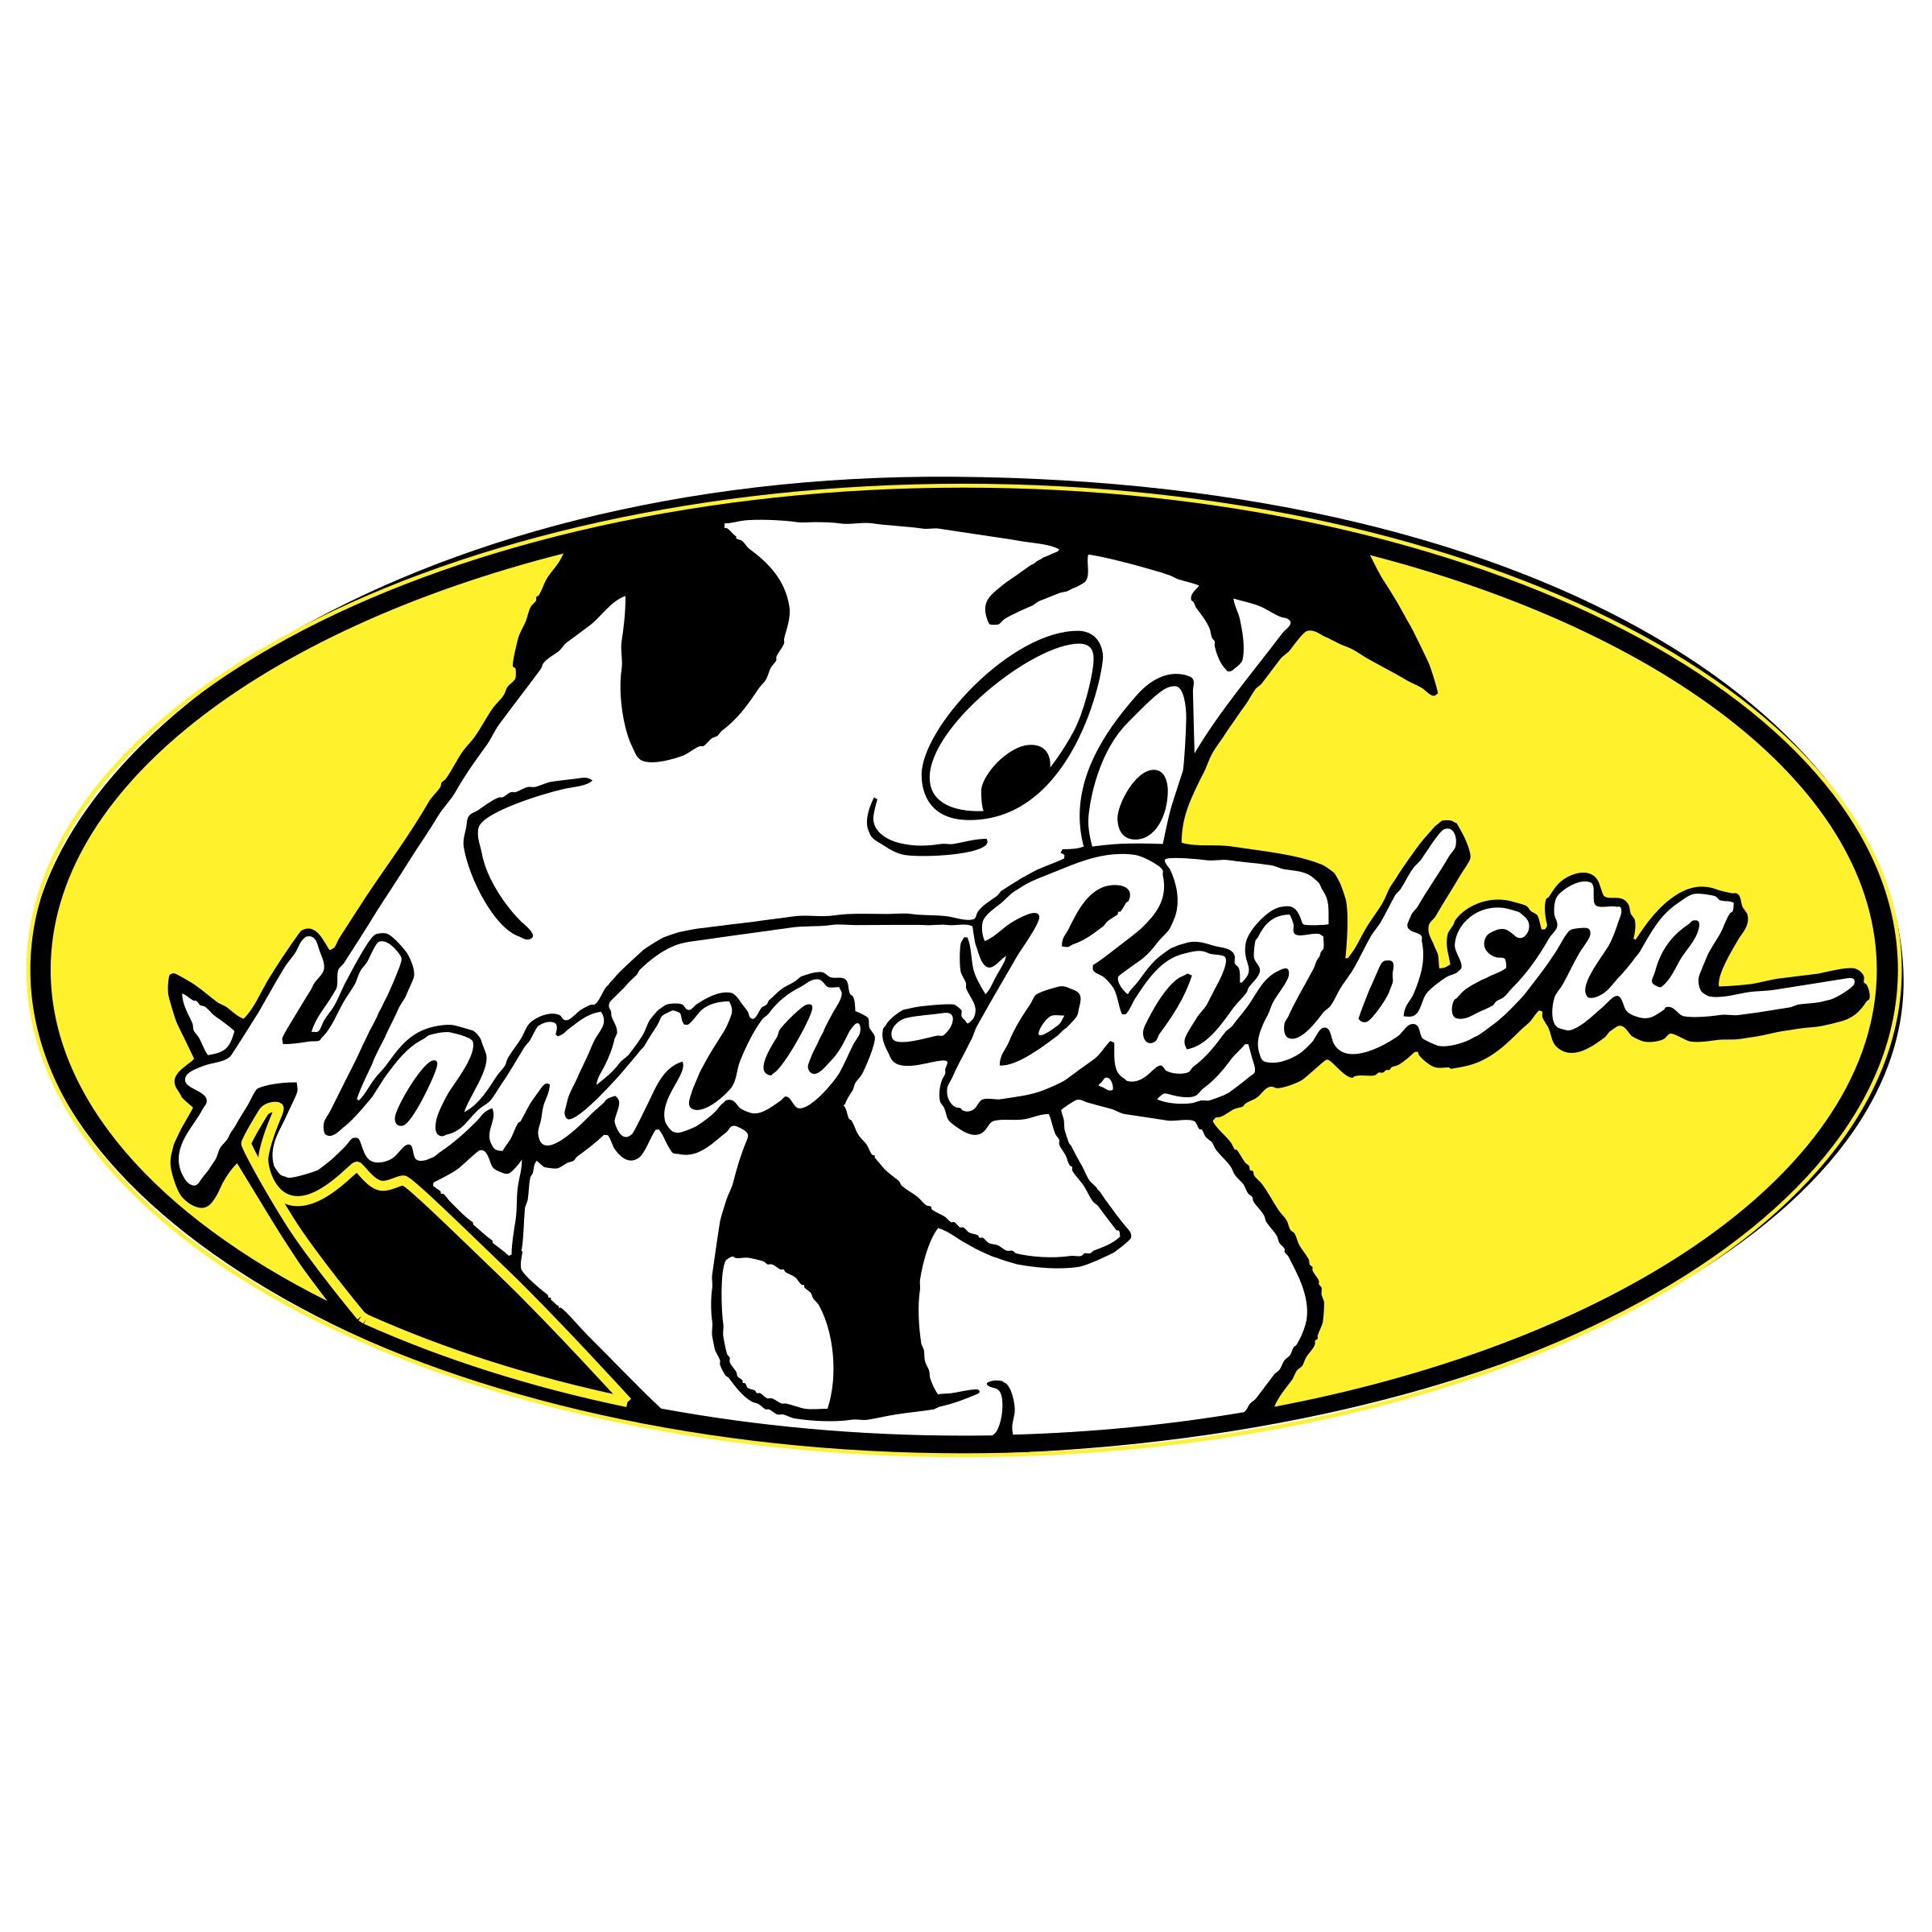 Hanna-Barbera Logo - Hanna Barbera Logo PNG Transparent & SVG Vector